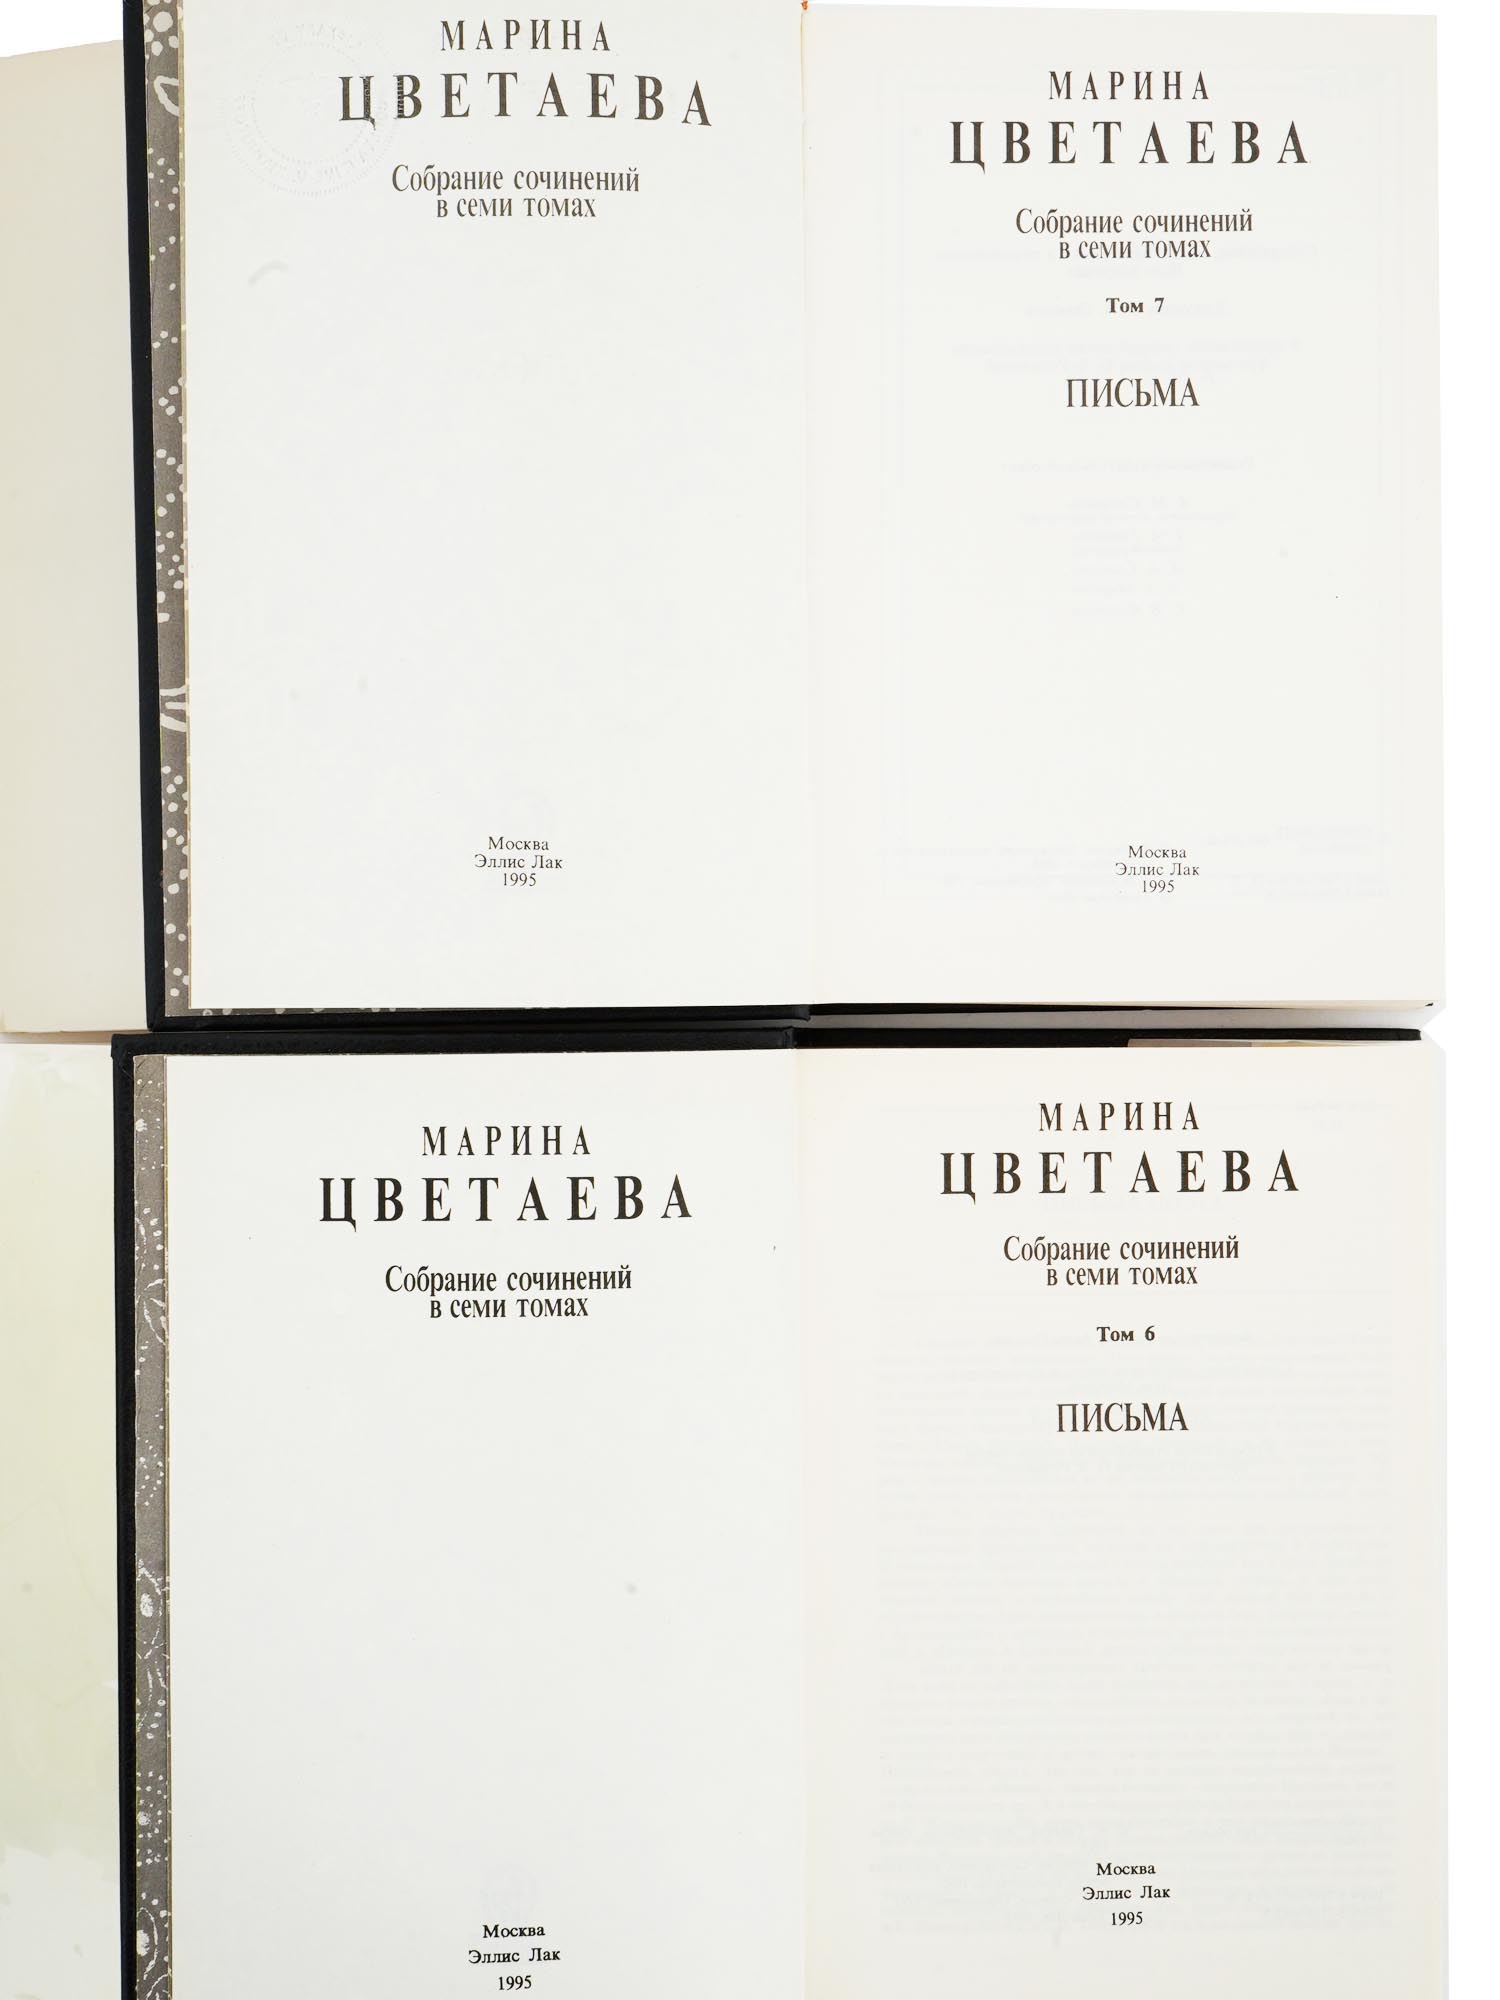 RUSSIAN BOOKS COMPLETE WORKS OF MARINA TSVETAEVA PIC-4